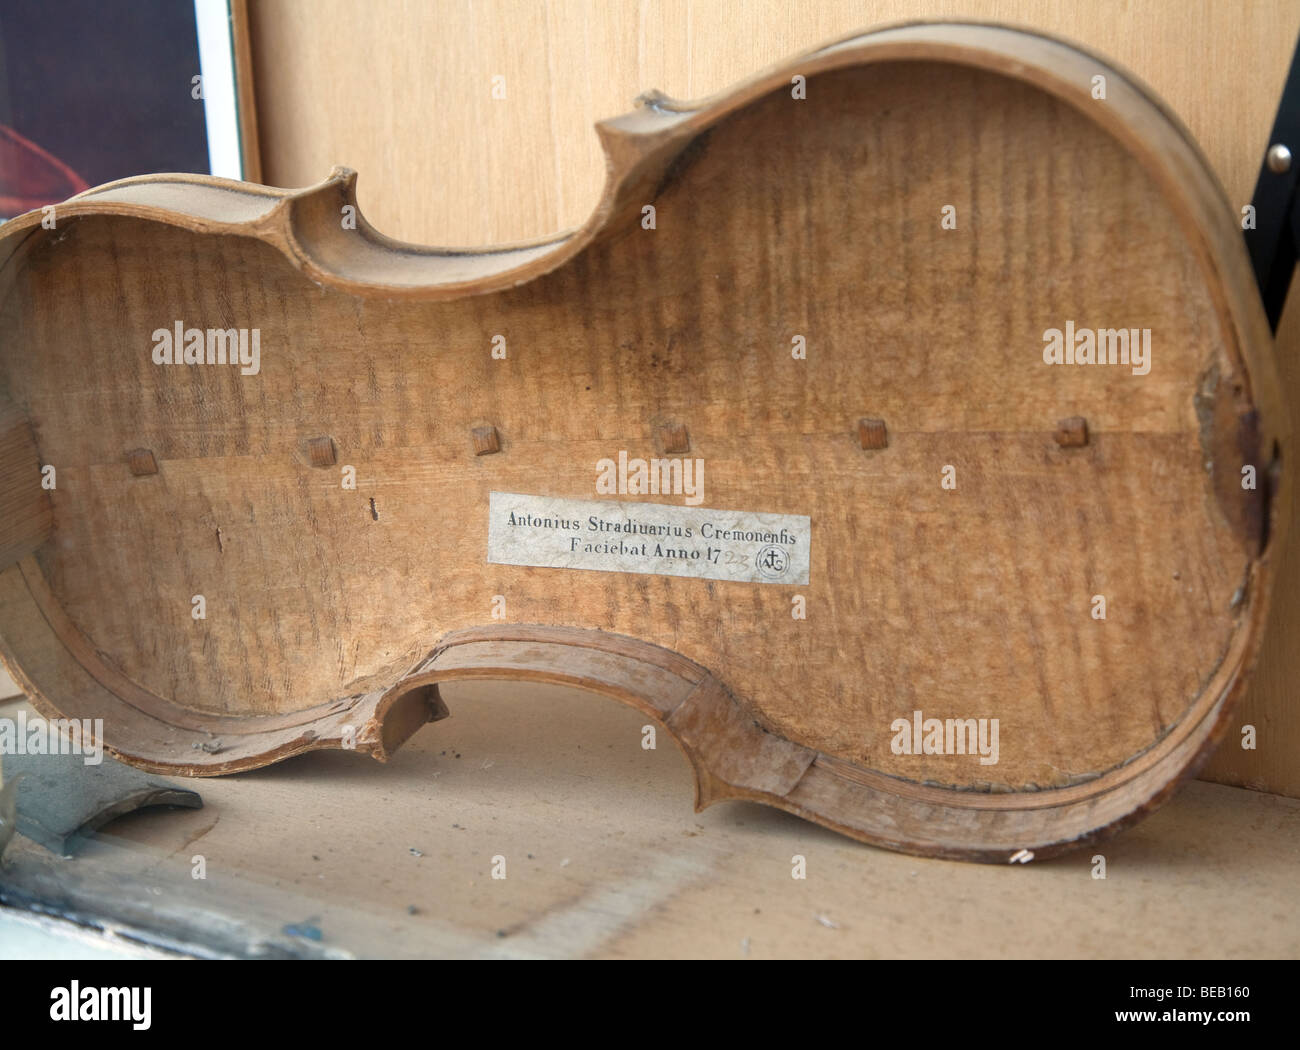 Stradivarius violin casing Stock Photo